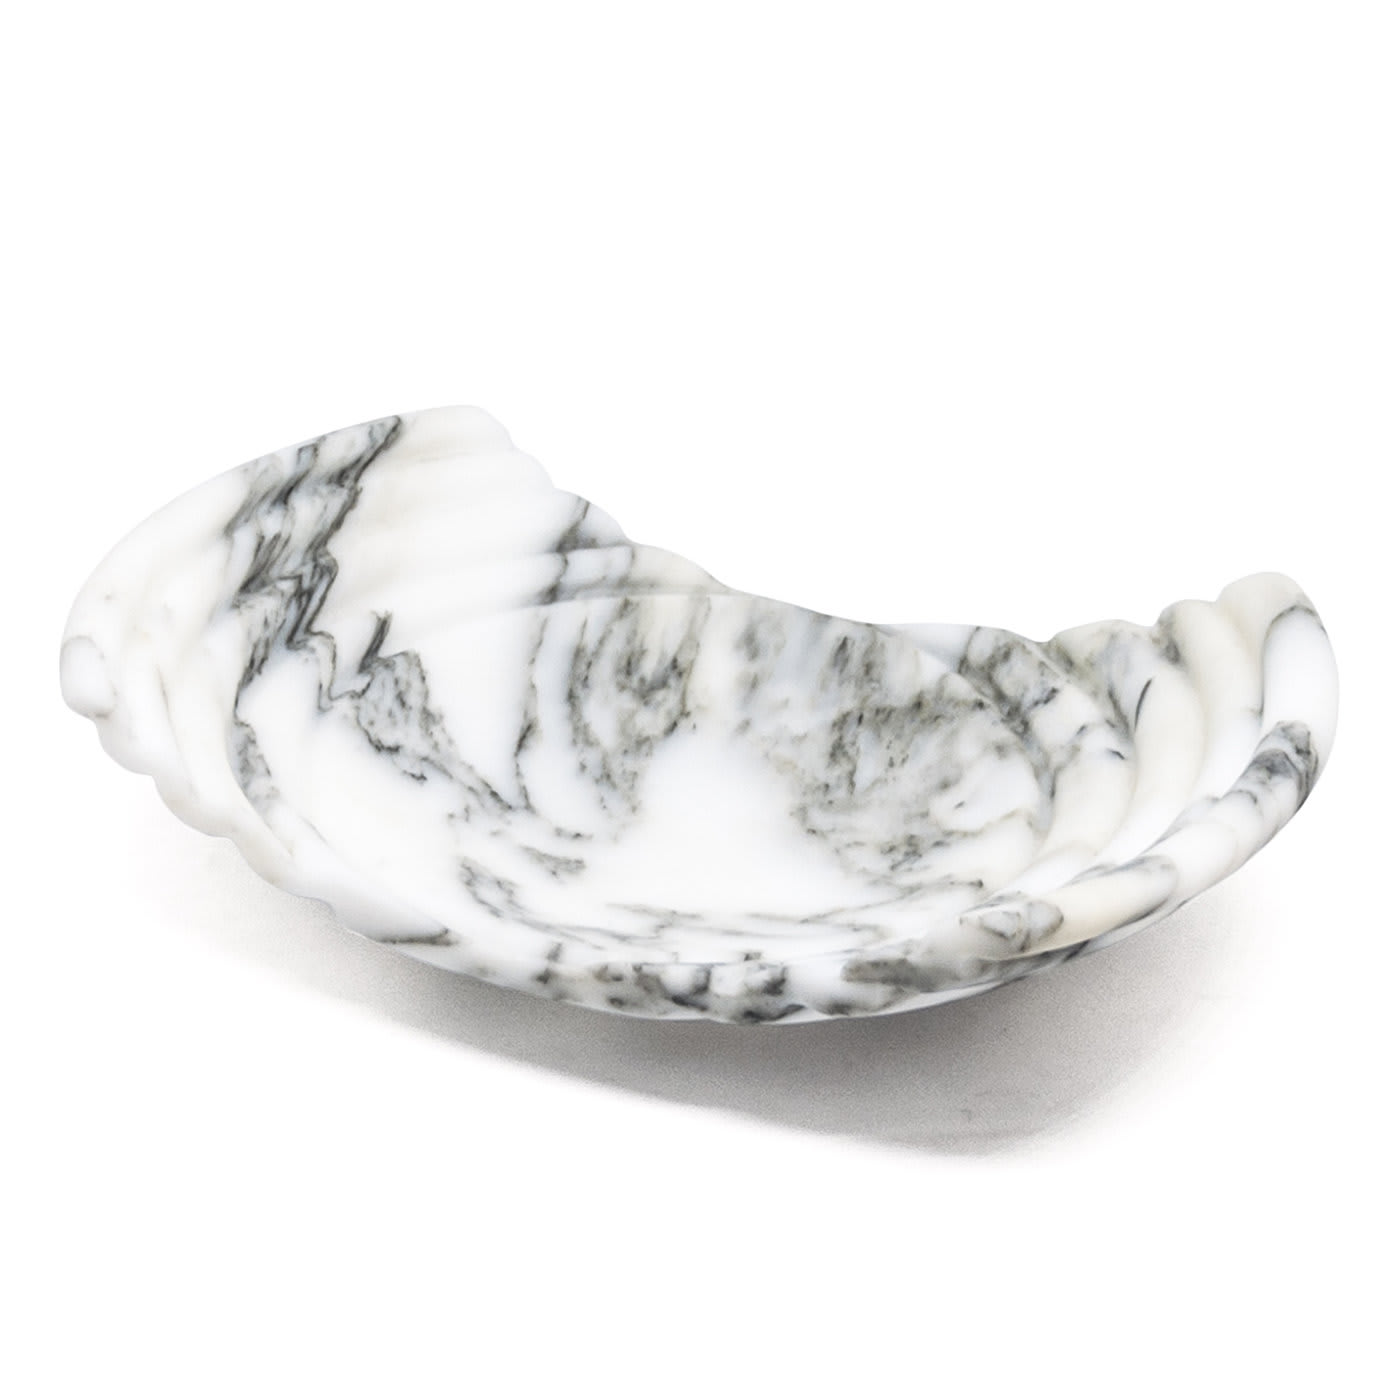 Wave Vase in Arabescato Marble by Jacopo Simonetti - FiammettaV Home Collection